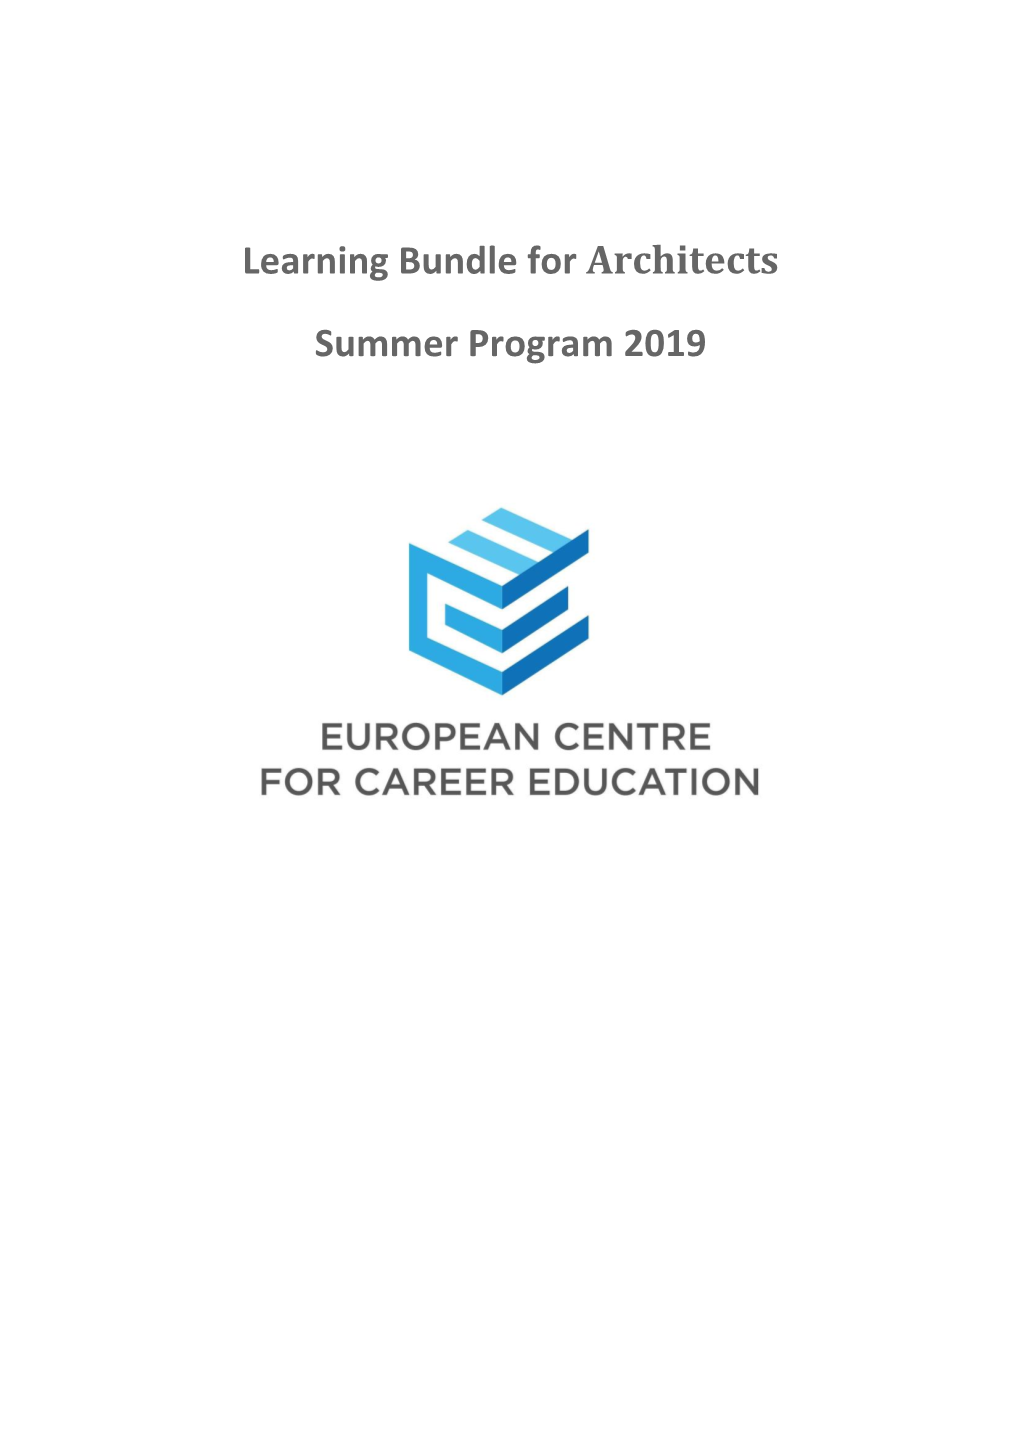 Learning Bundle for Architects Summer Program 2019